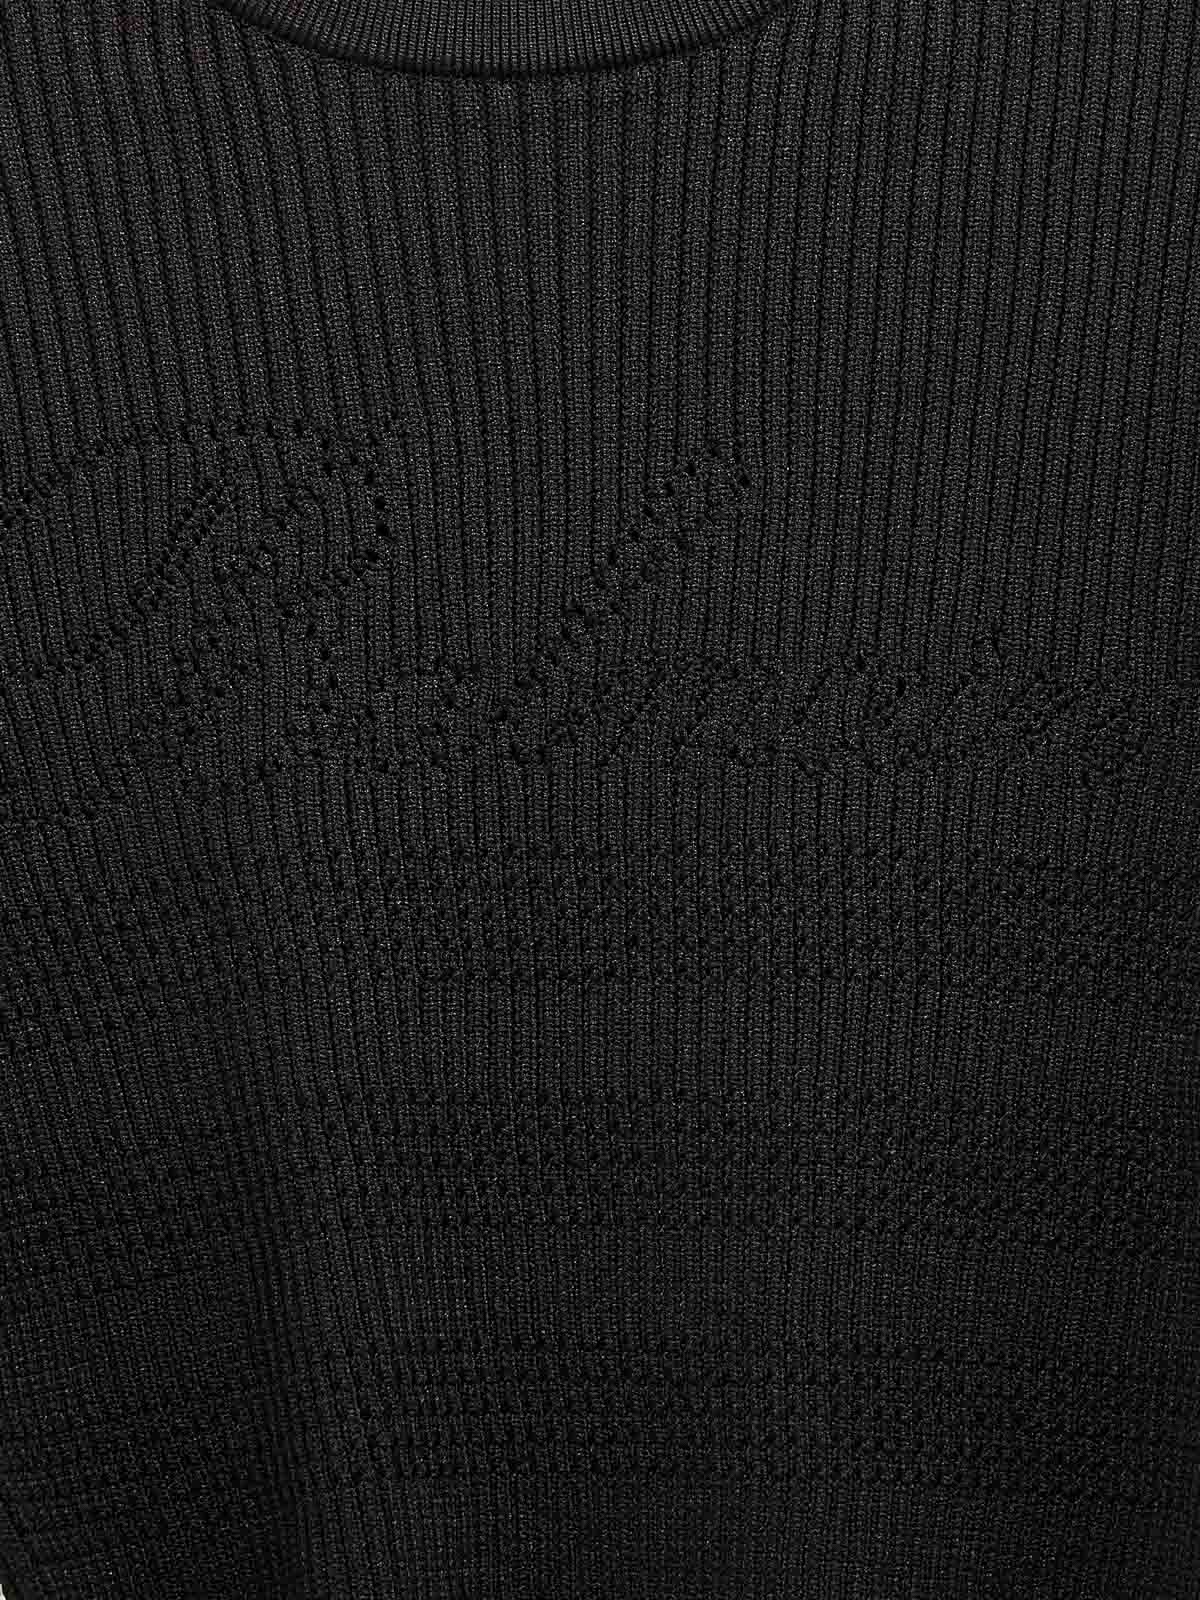 Shop Balmain Logo In Black